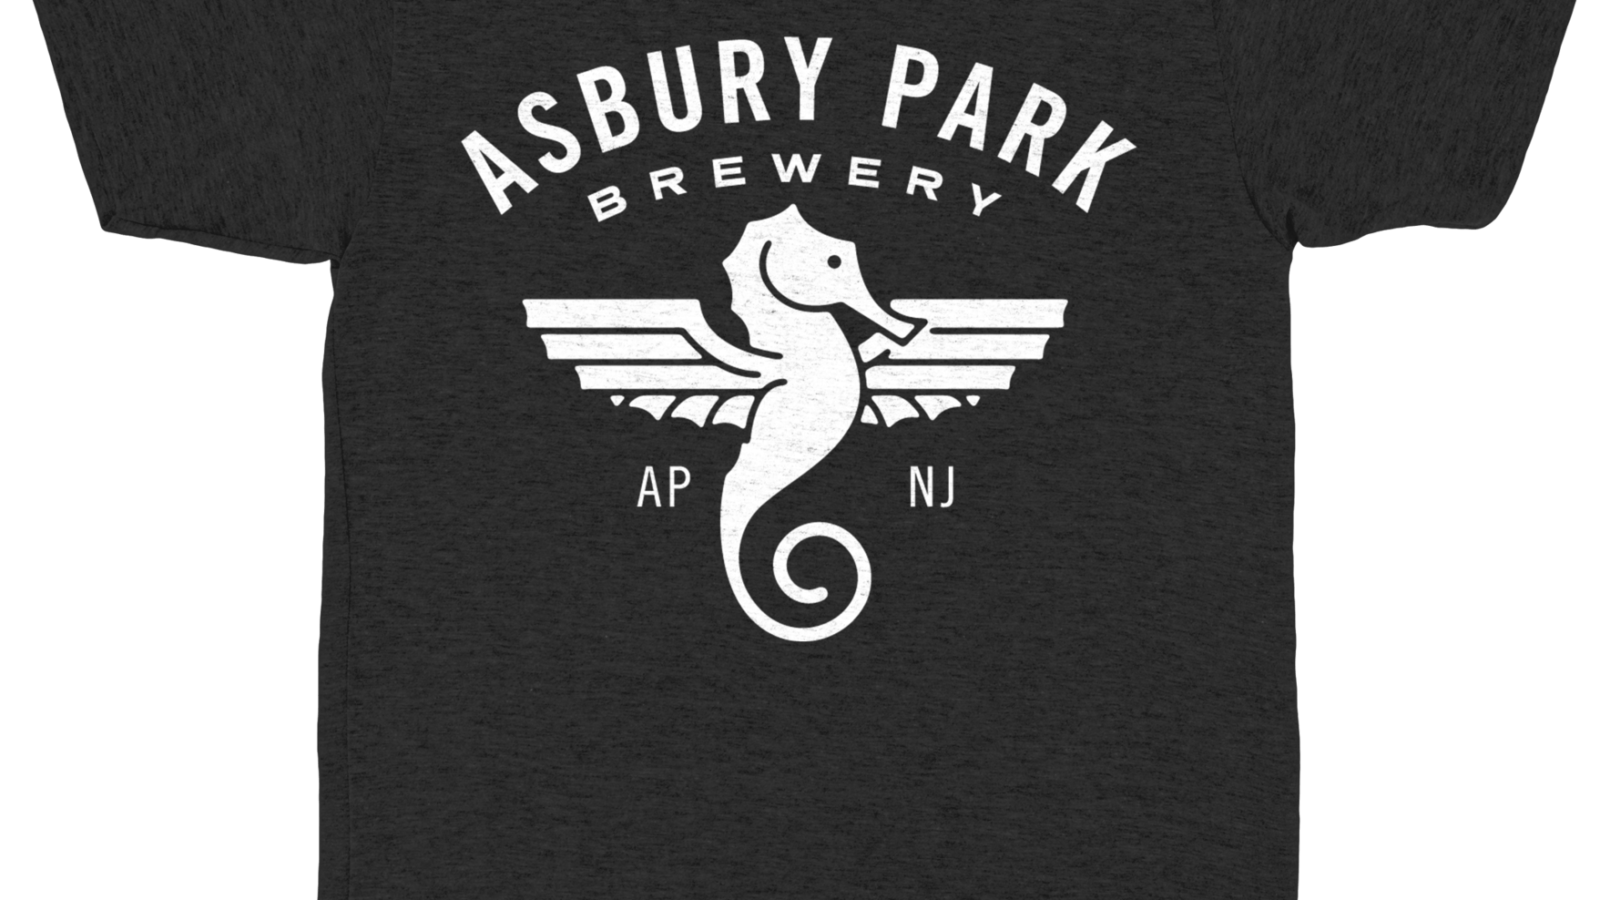 asbury park brewery